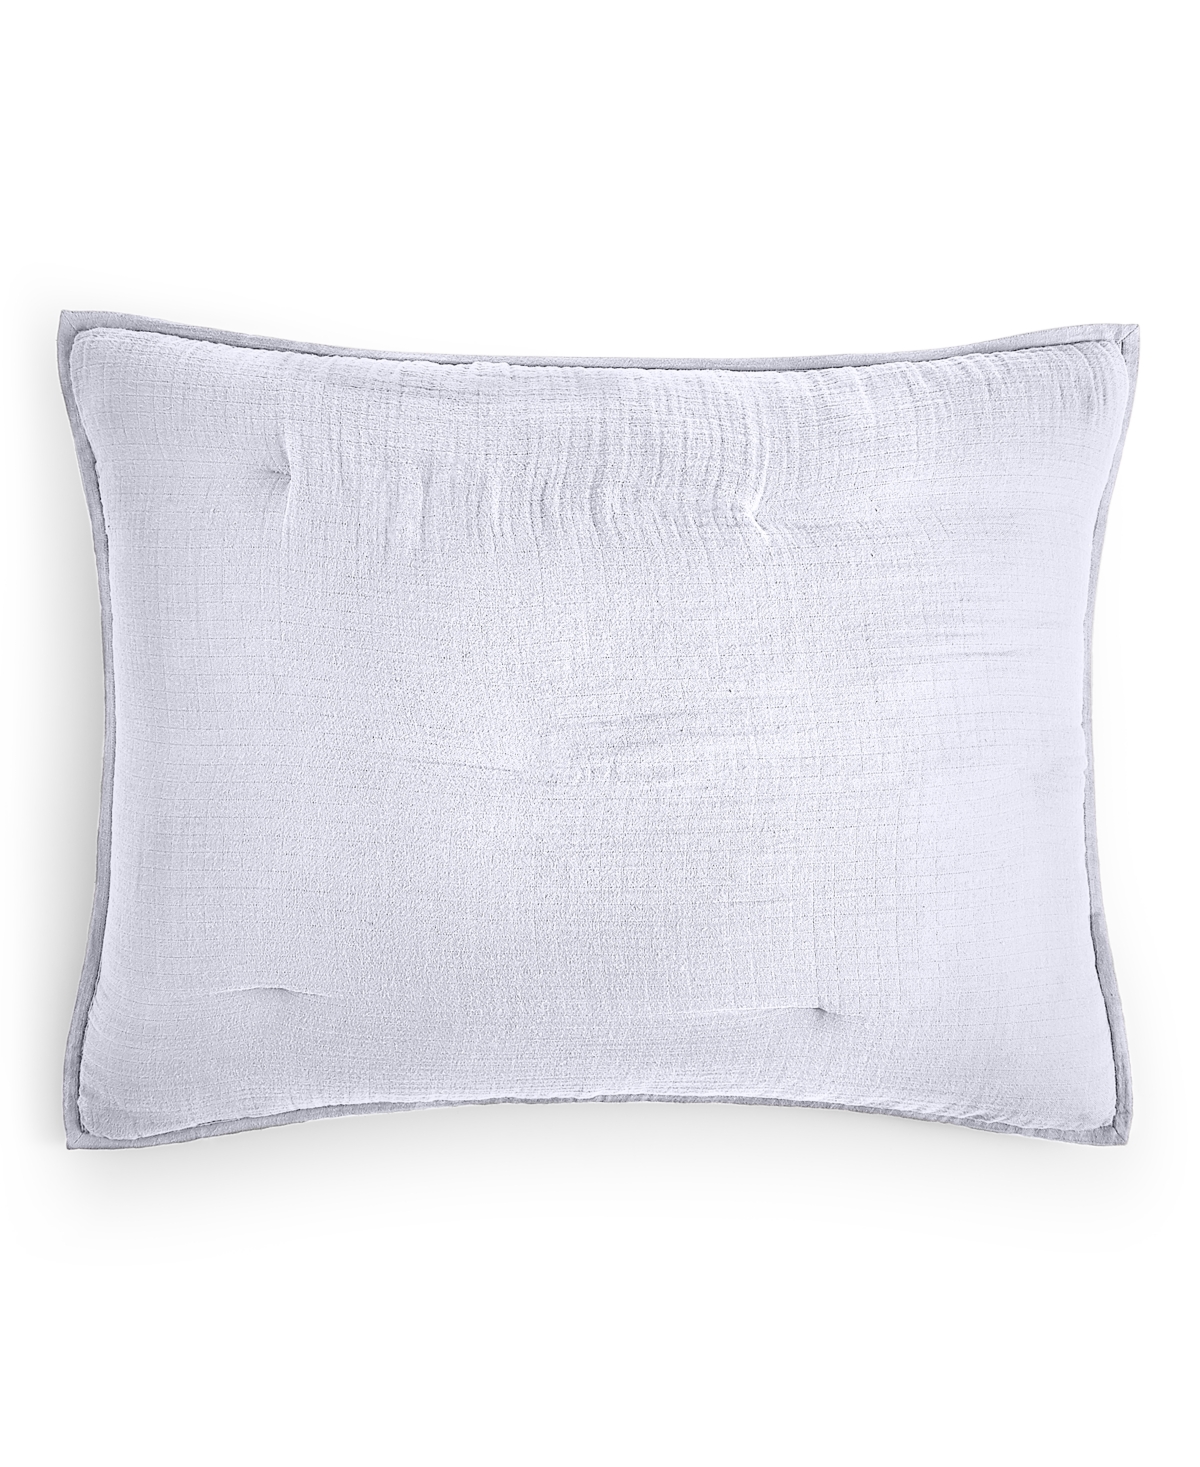 Textured Gauze Sham, Standard, Created for Macy's - White